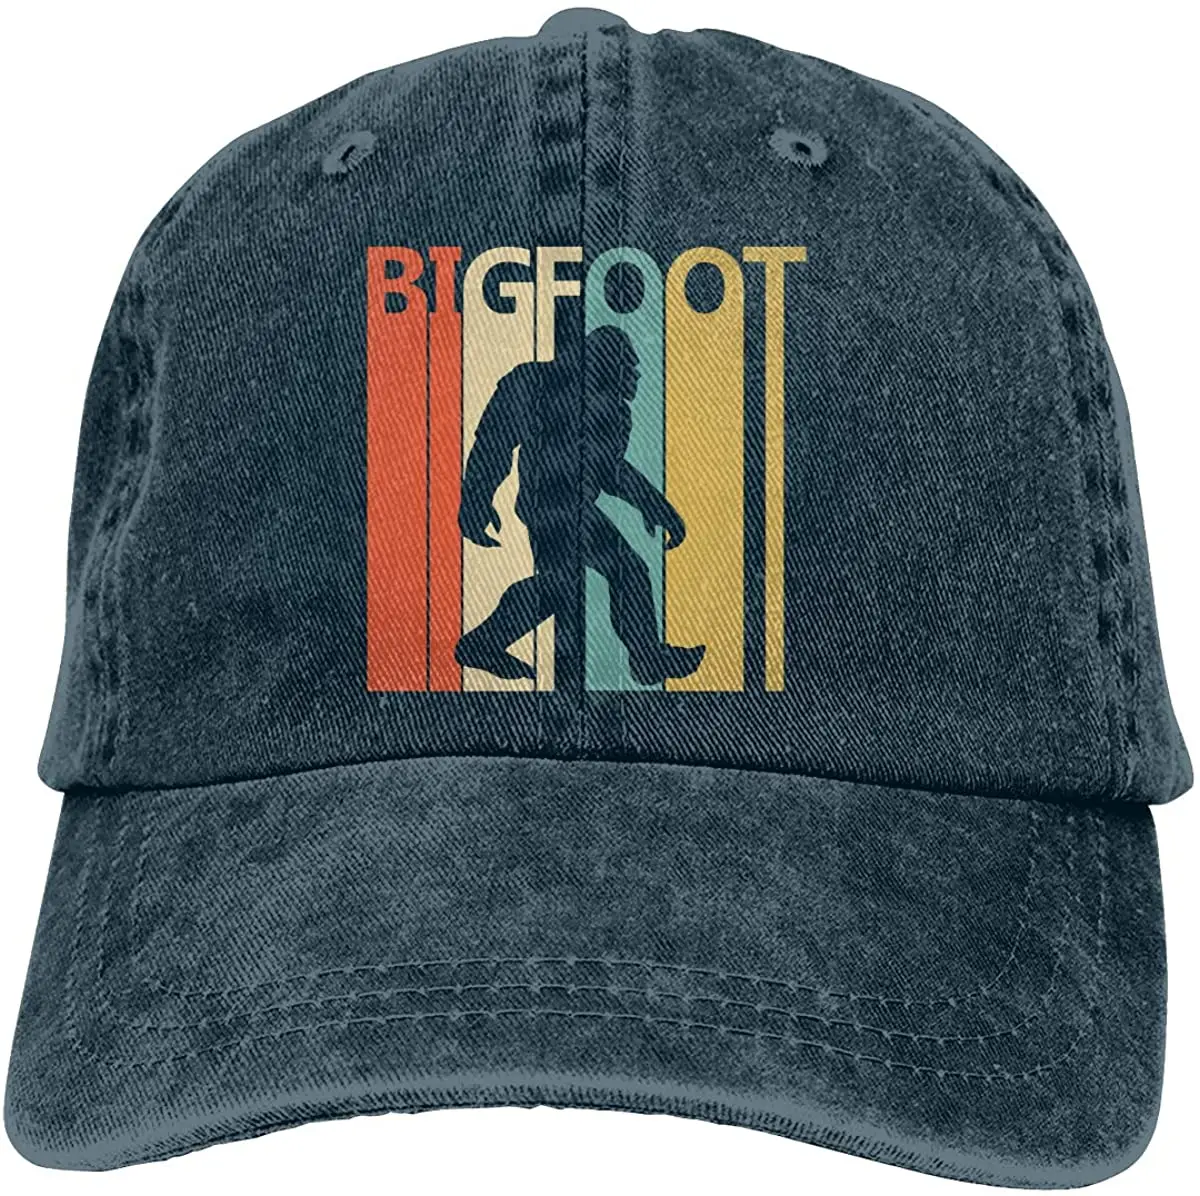 

Vintage 1970s Bigfoot Denim Cowboy Peaked Caps,Baseball Trucker/Dad/Golf/Fishing Hats for Mens/Womens